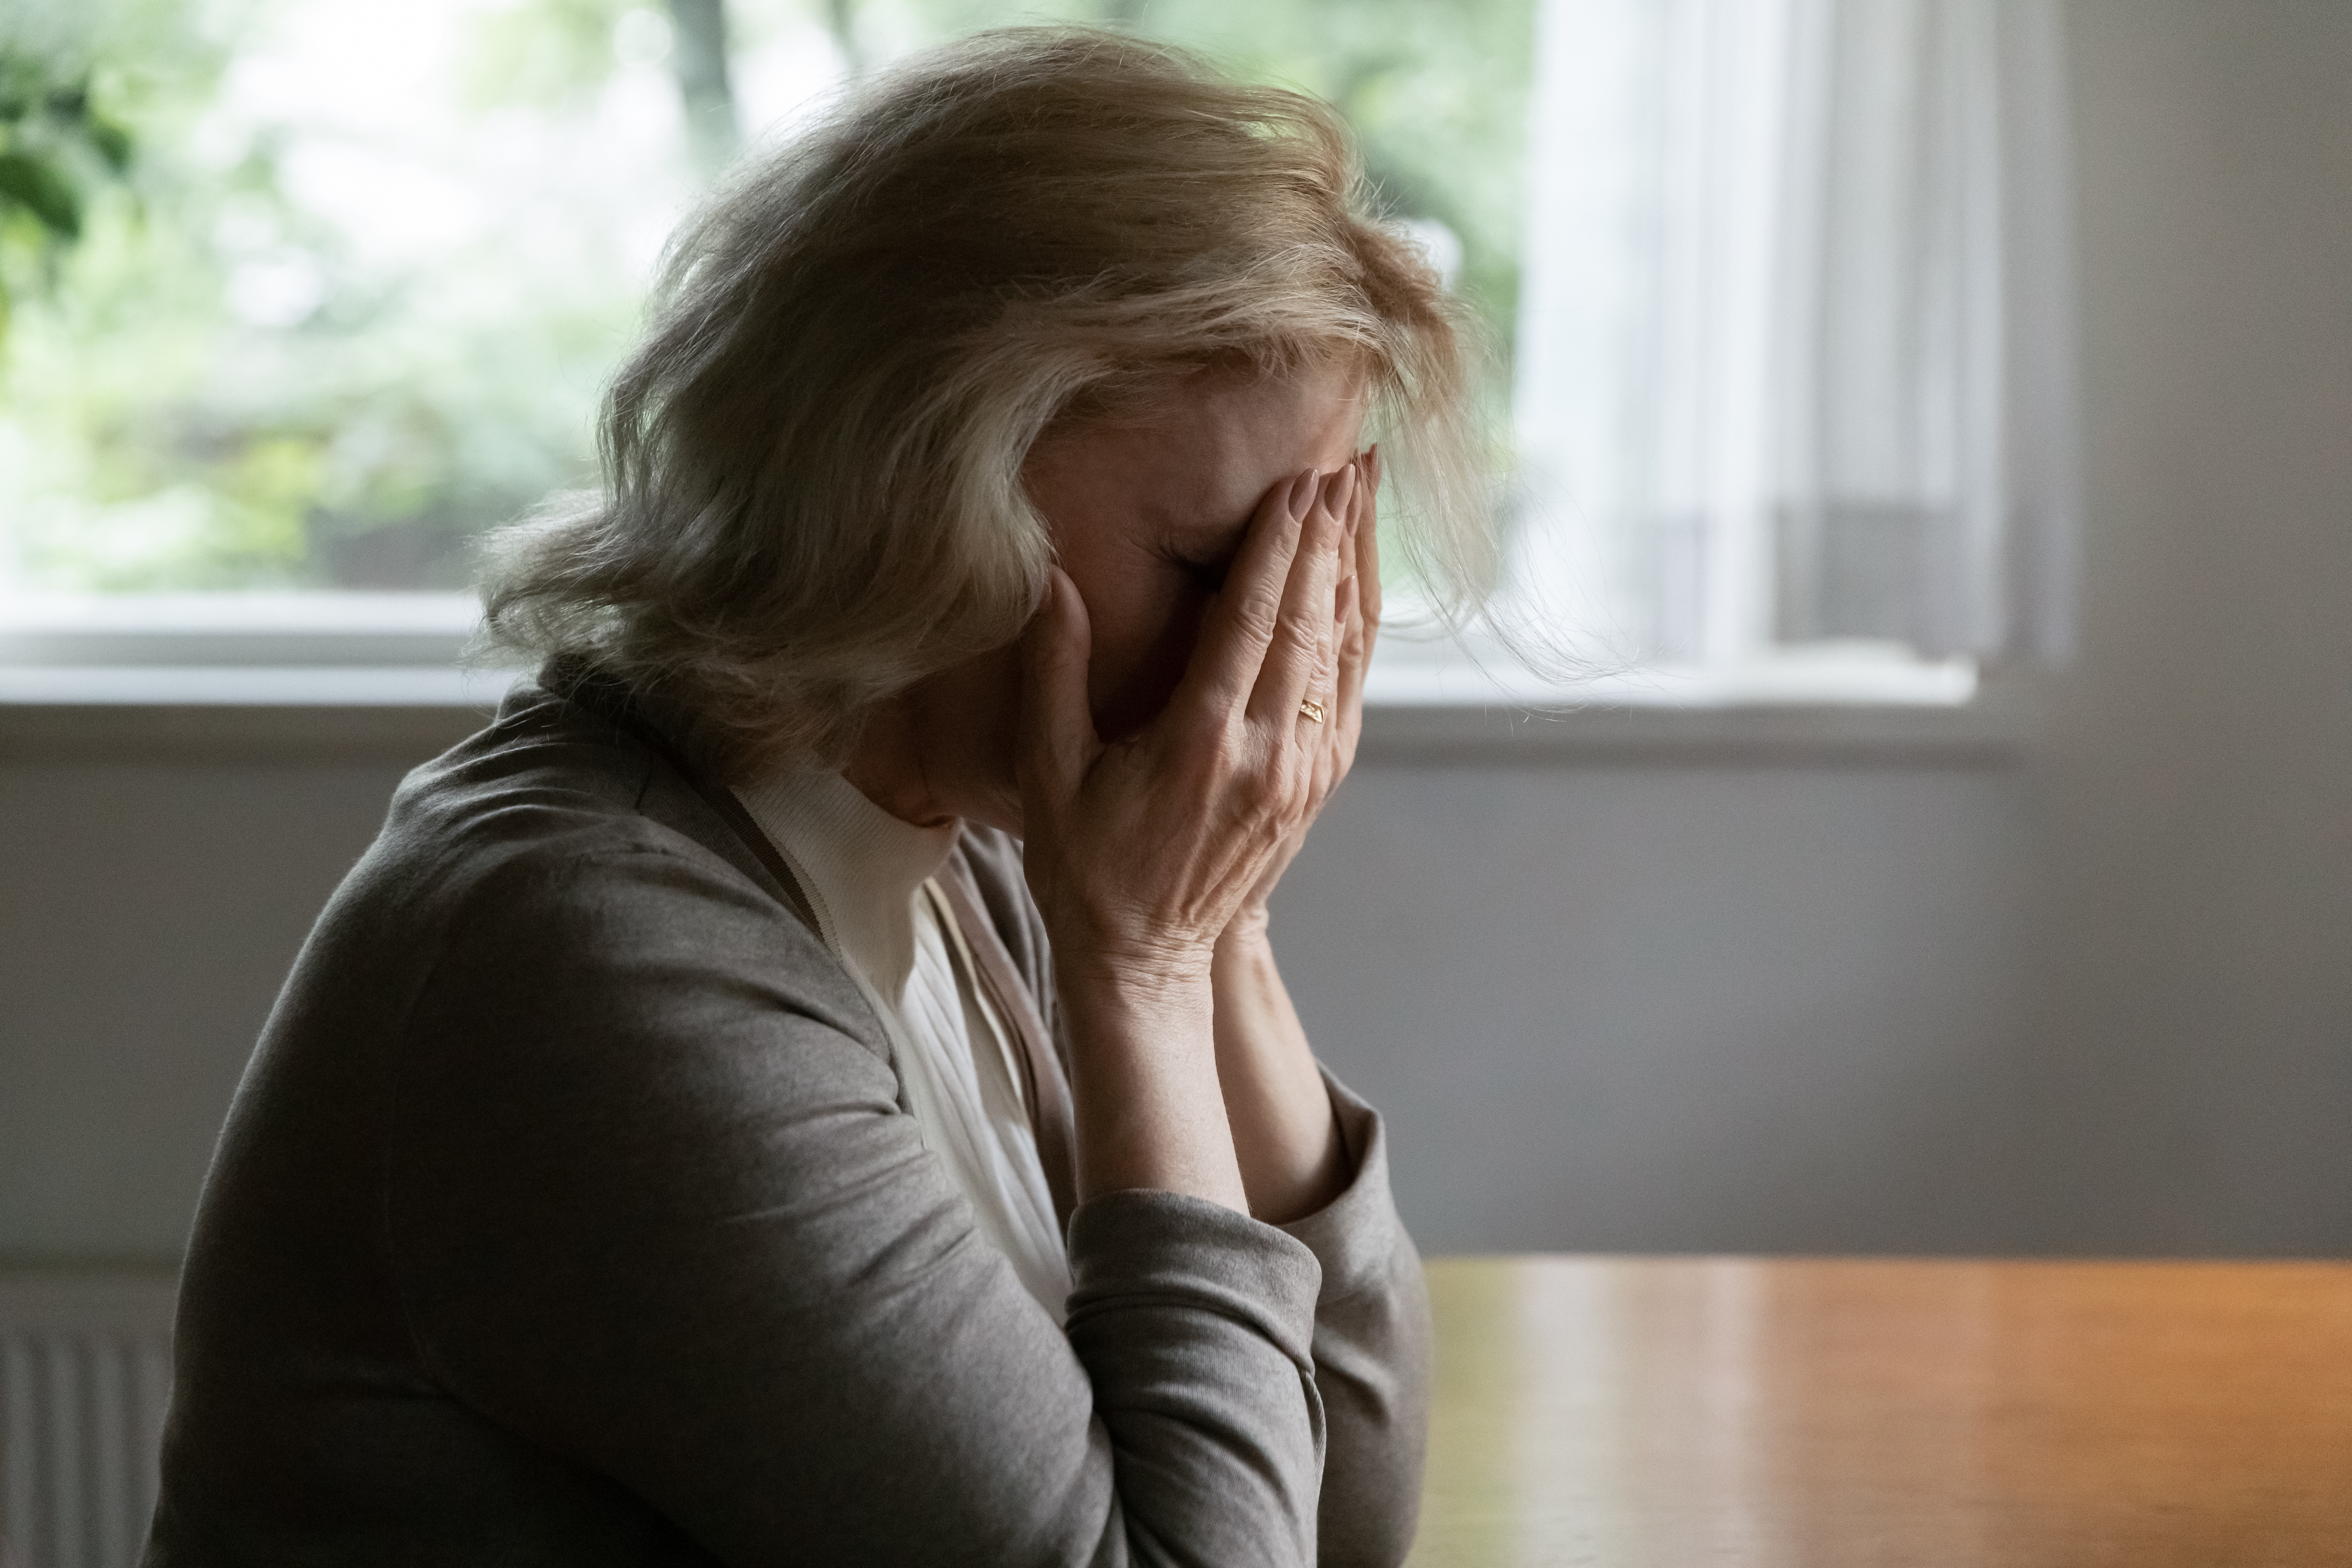 An elderly woman looking sad | Source: Shutterstock